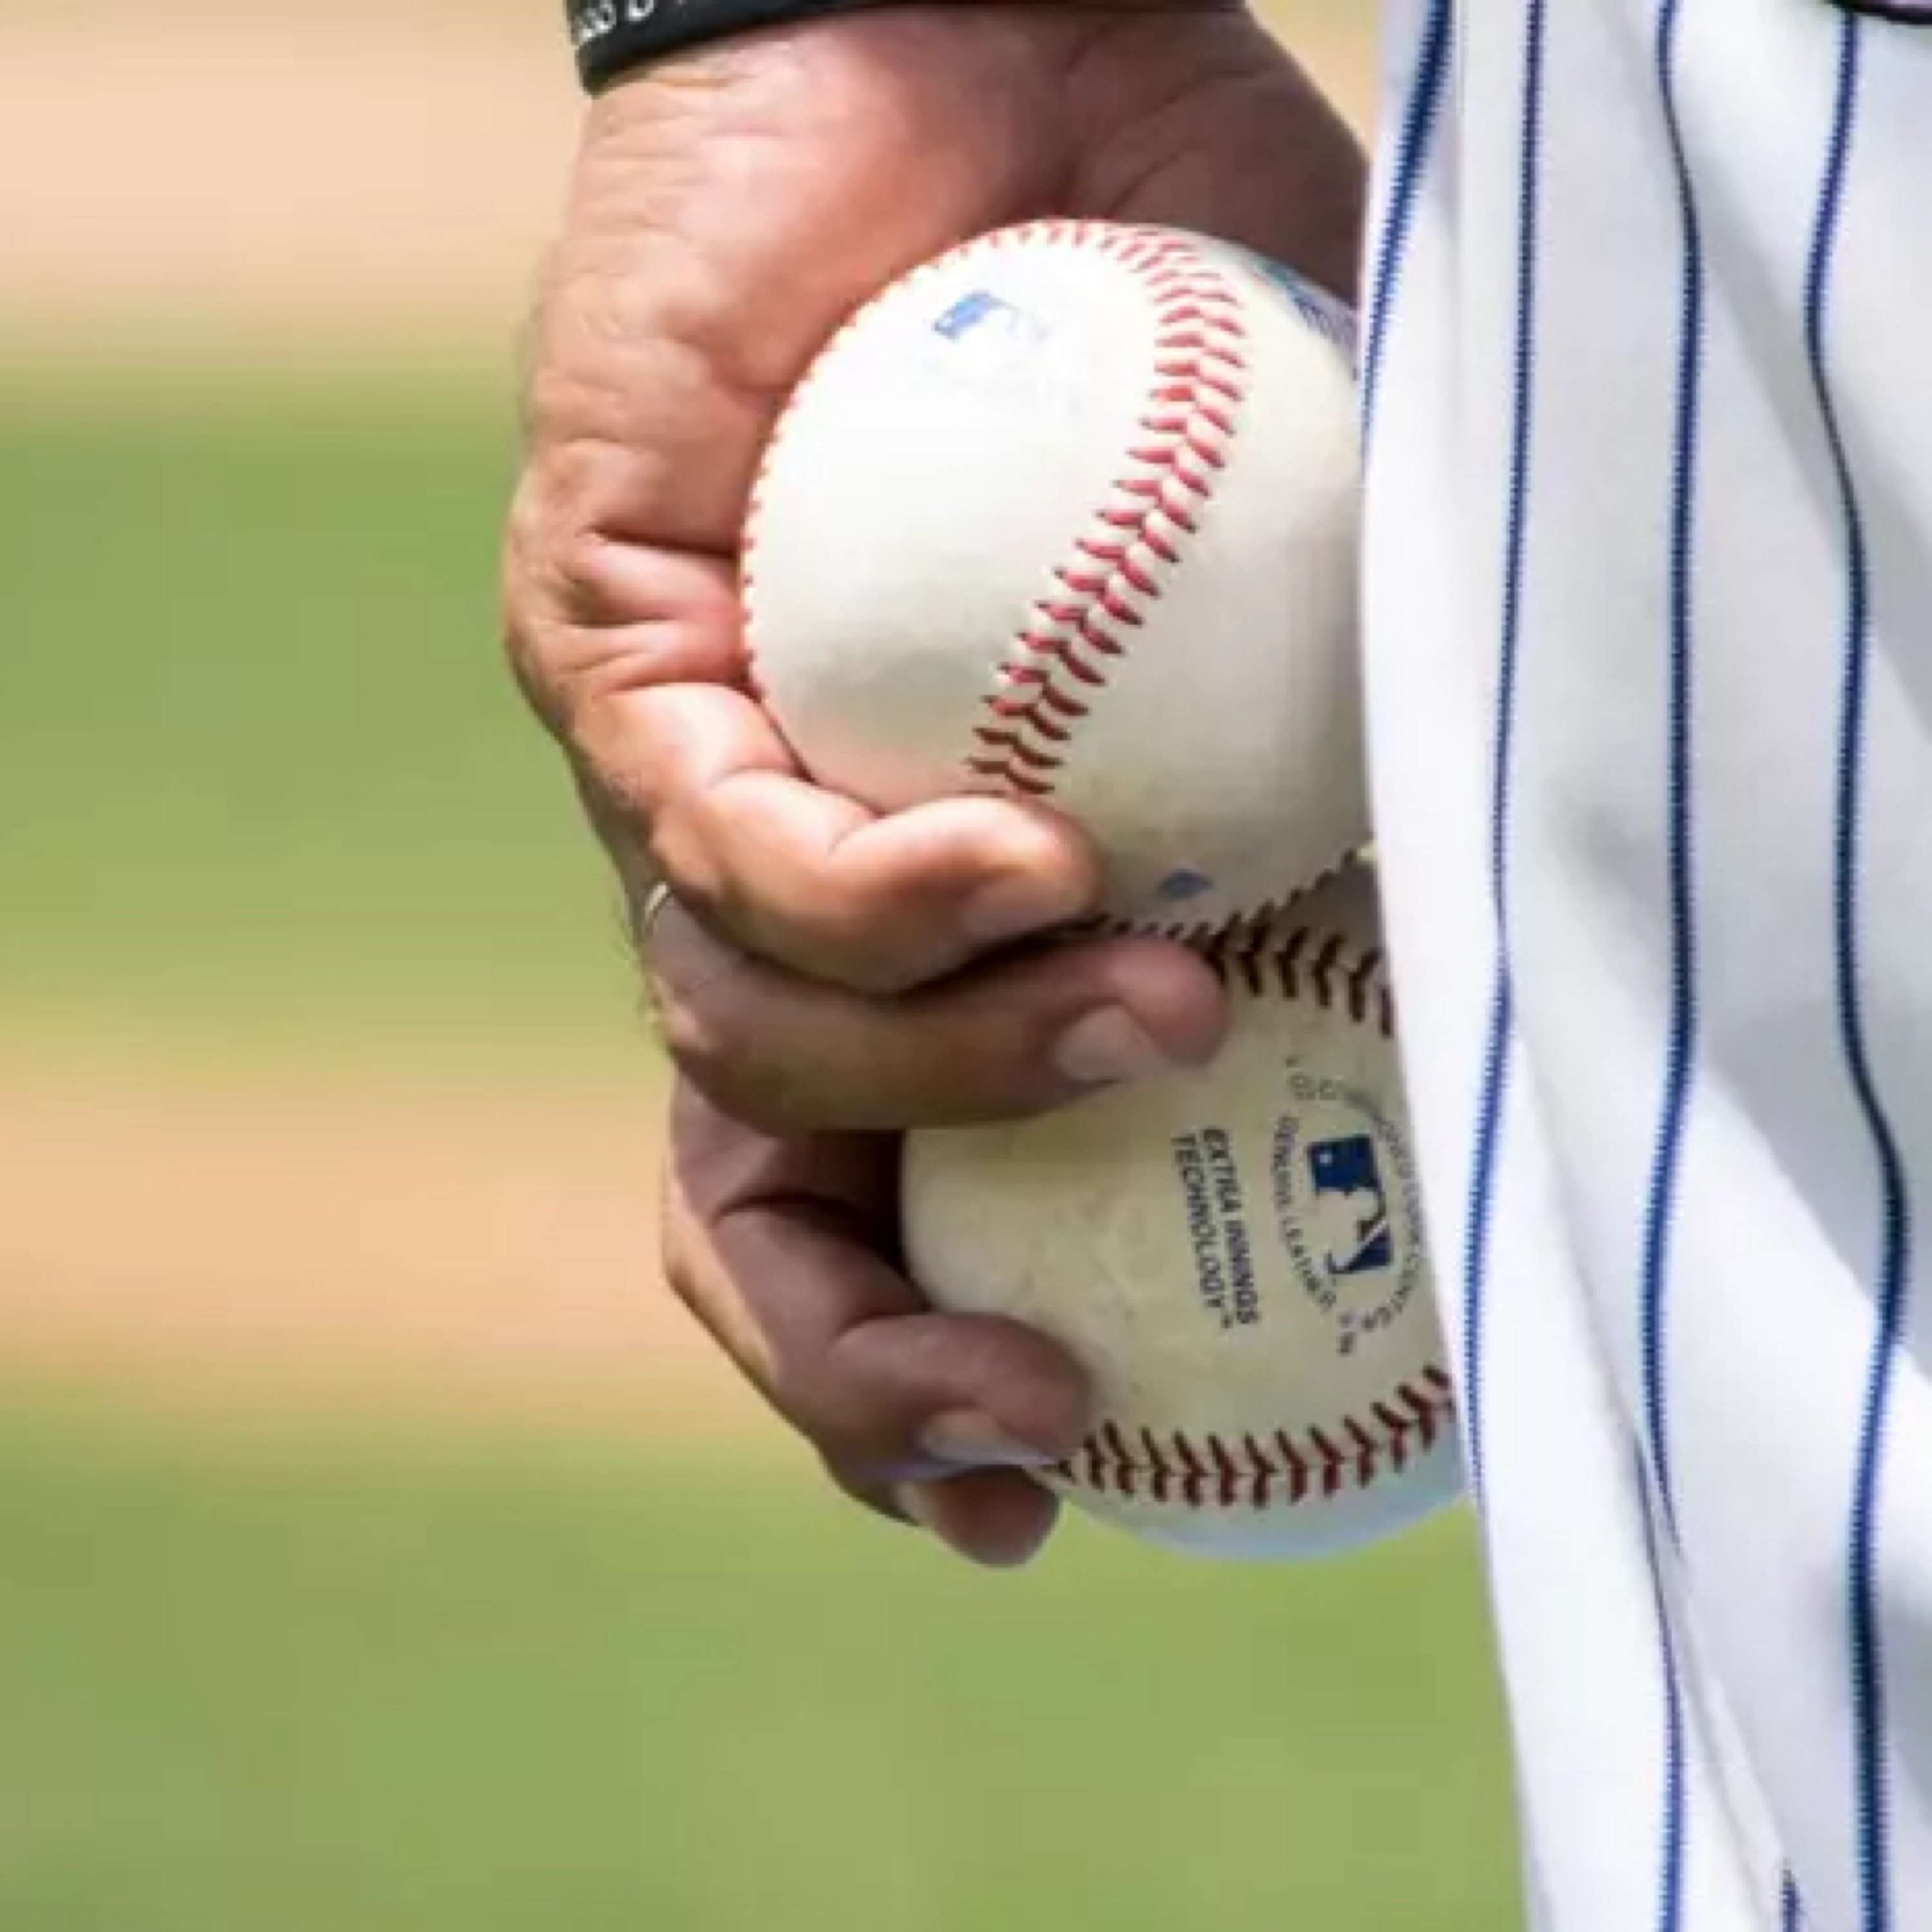 MLB Teams Ignoring Pride Month, Spike in Texas Disasters, Israeli Tourism Plummets